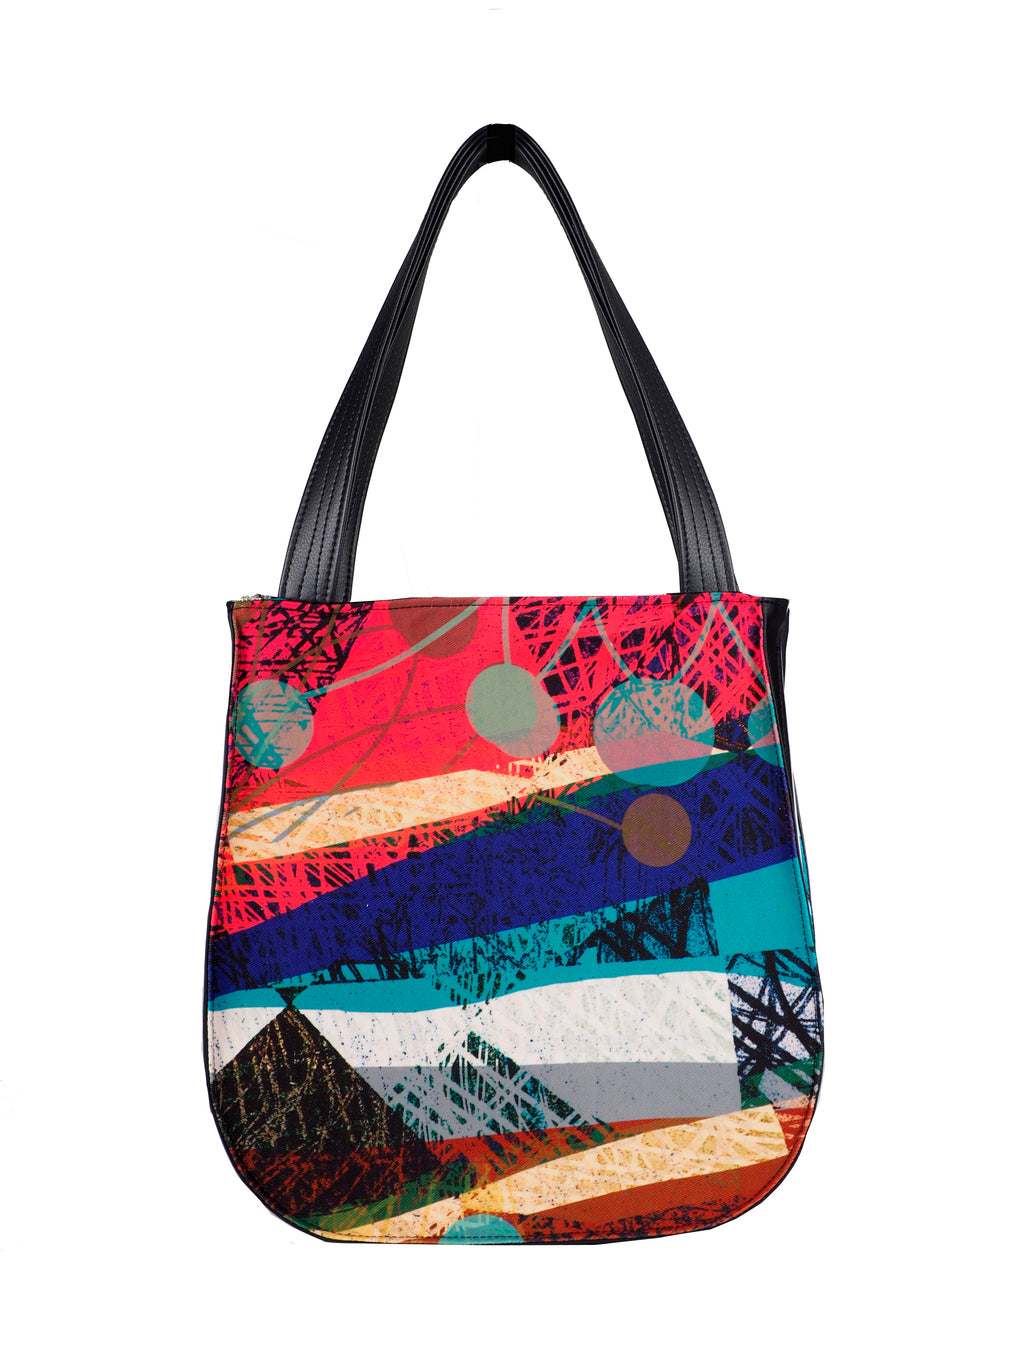 Bardo style bag - Nocturne - Premium style bag from BARDO ART WORKS - Just lvabstract, black, blue, floral, handemade, nocturne, pink, summer69.00! Shop now at BARDO ART WORKS